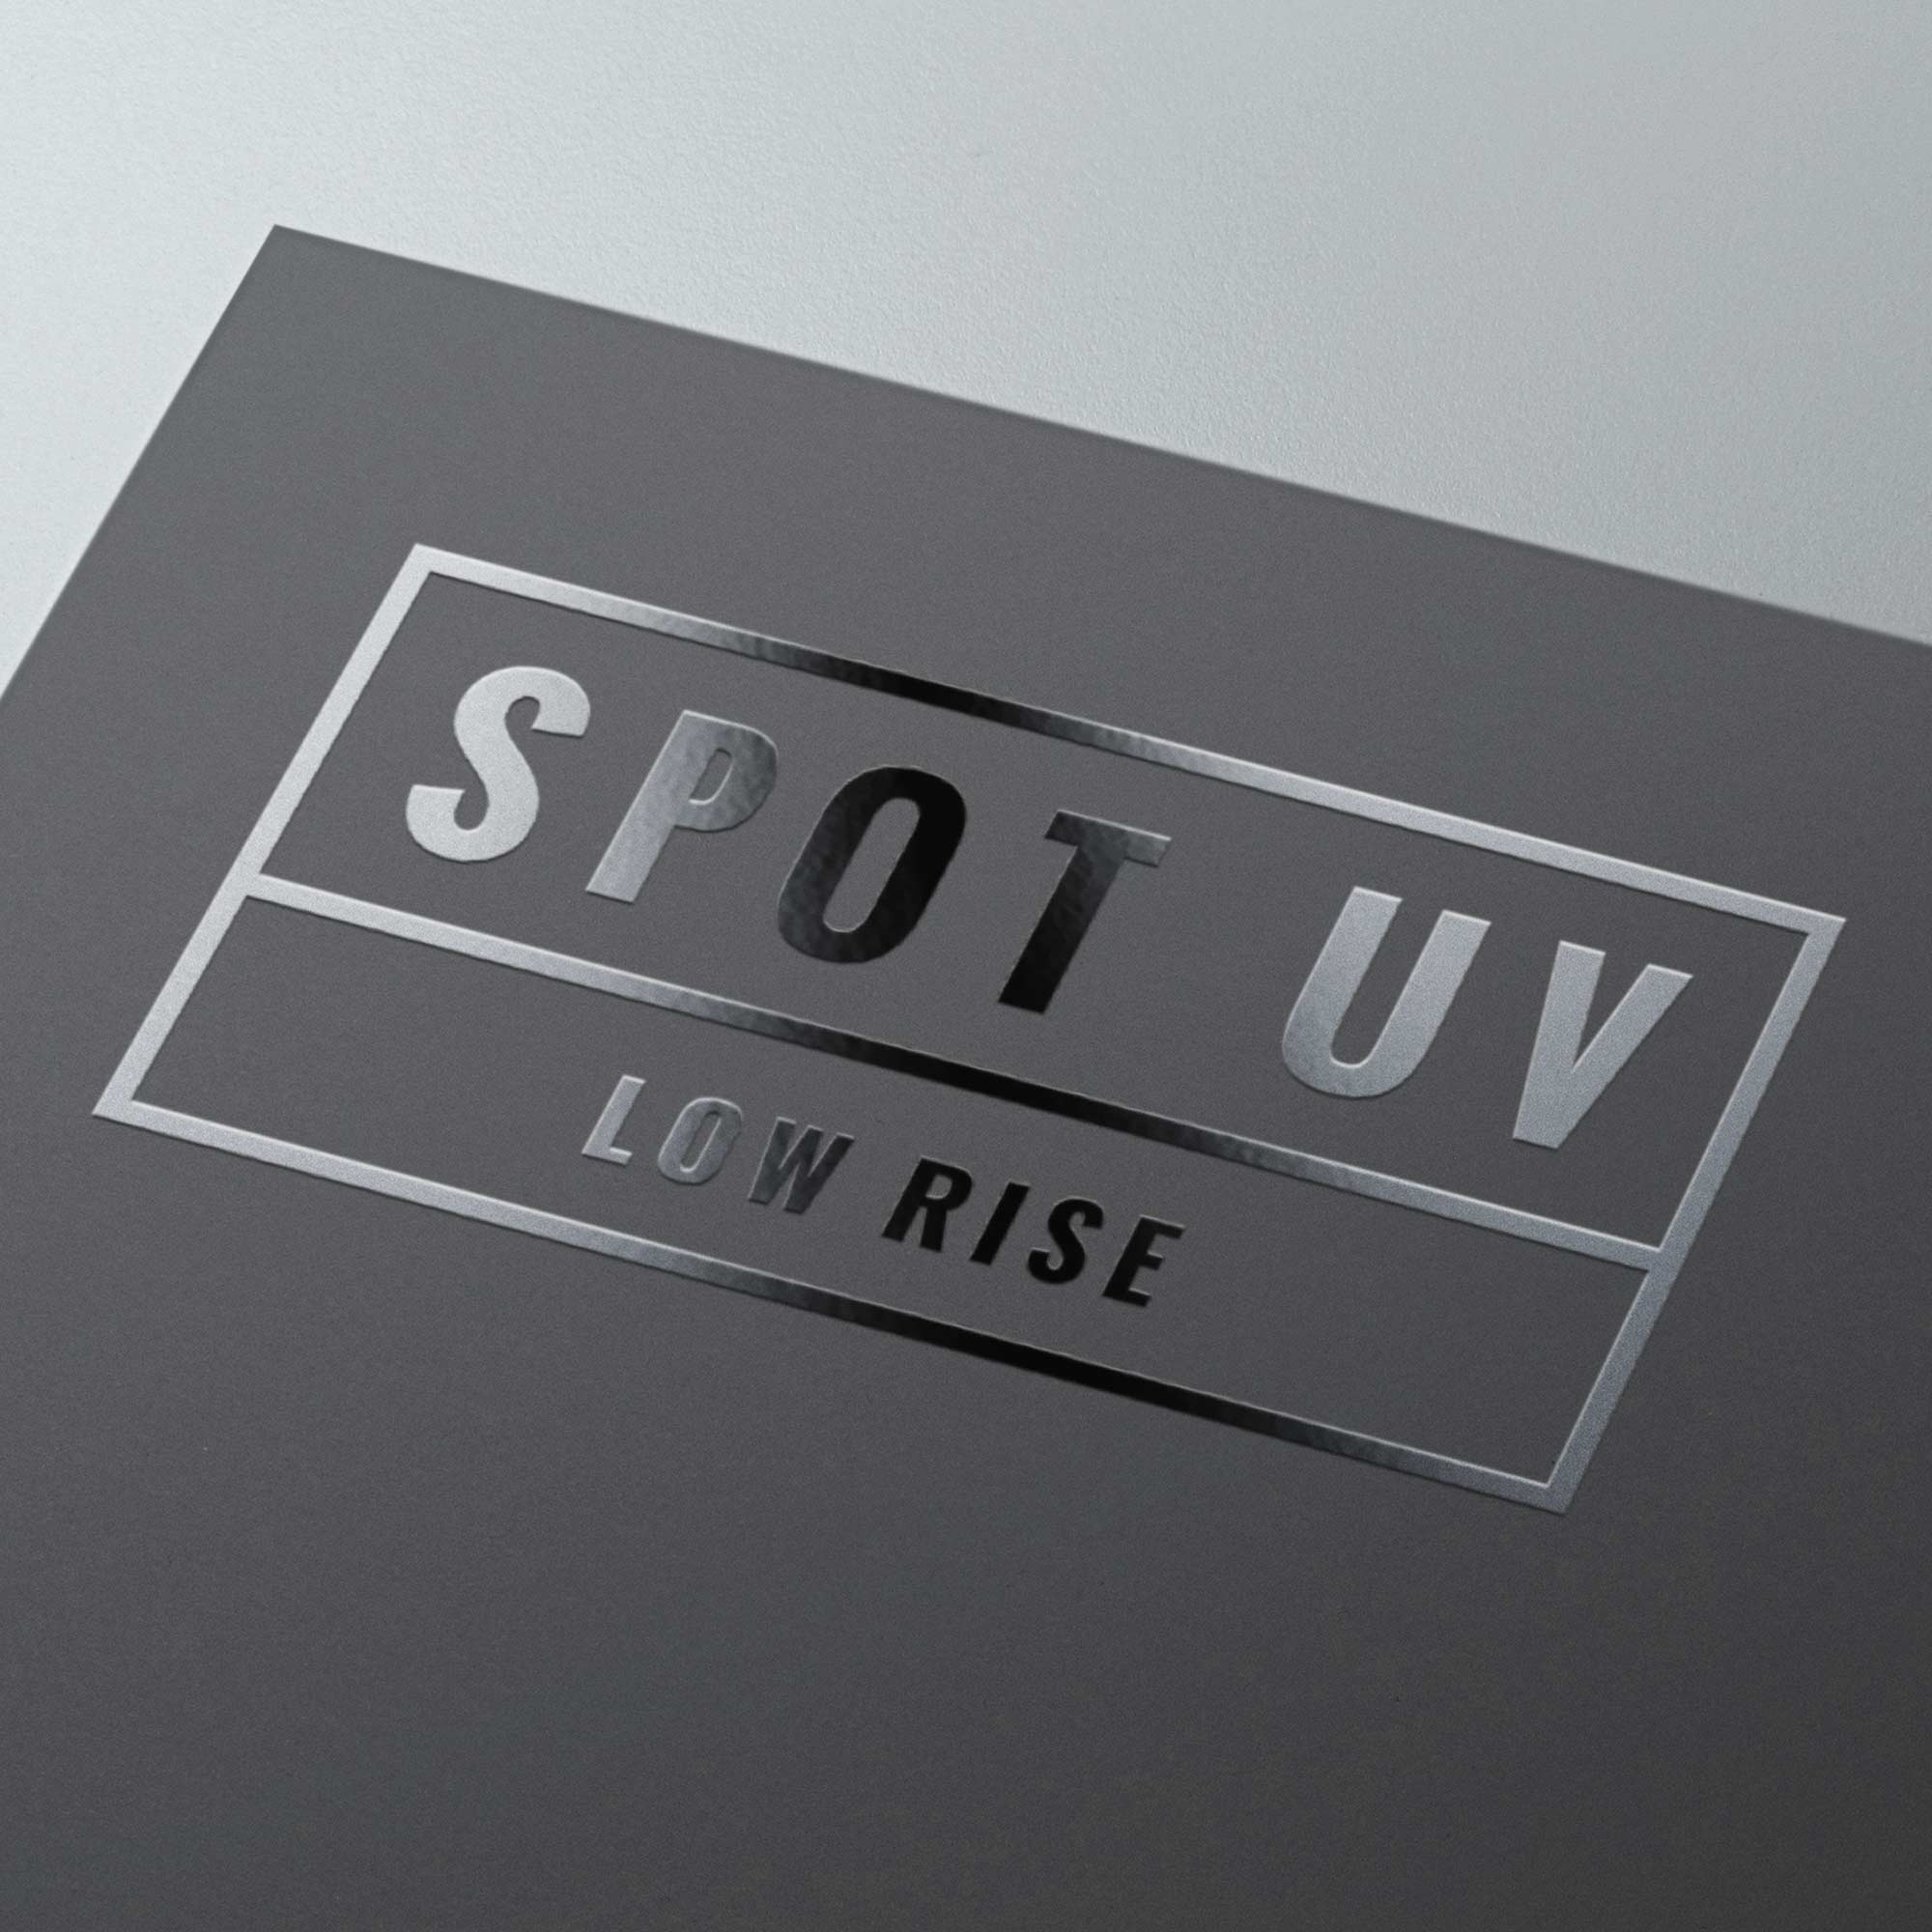 low_rise_spot_uv.jpg